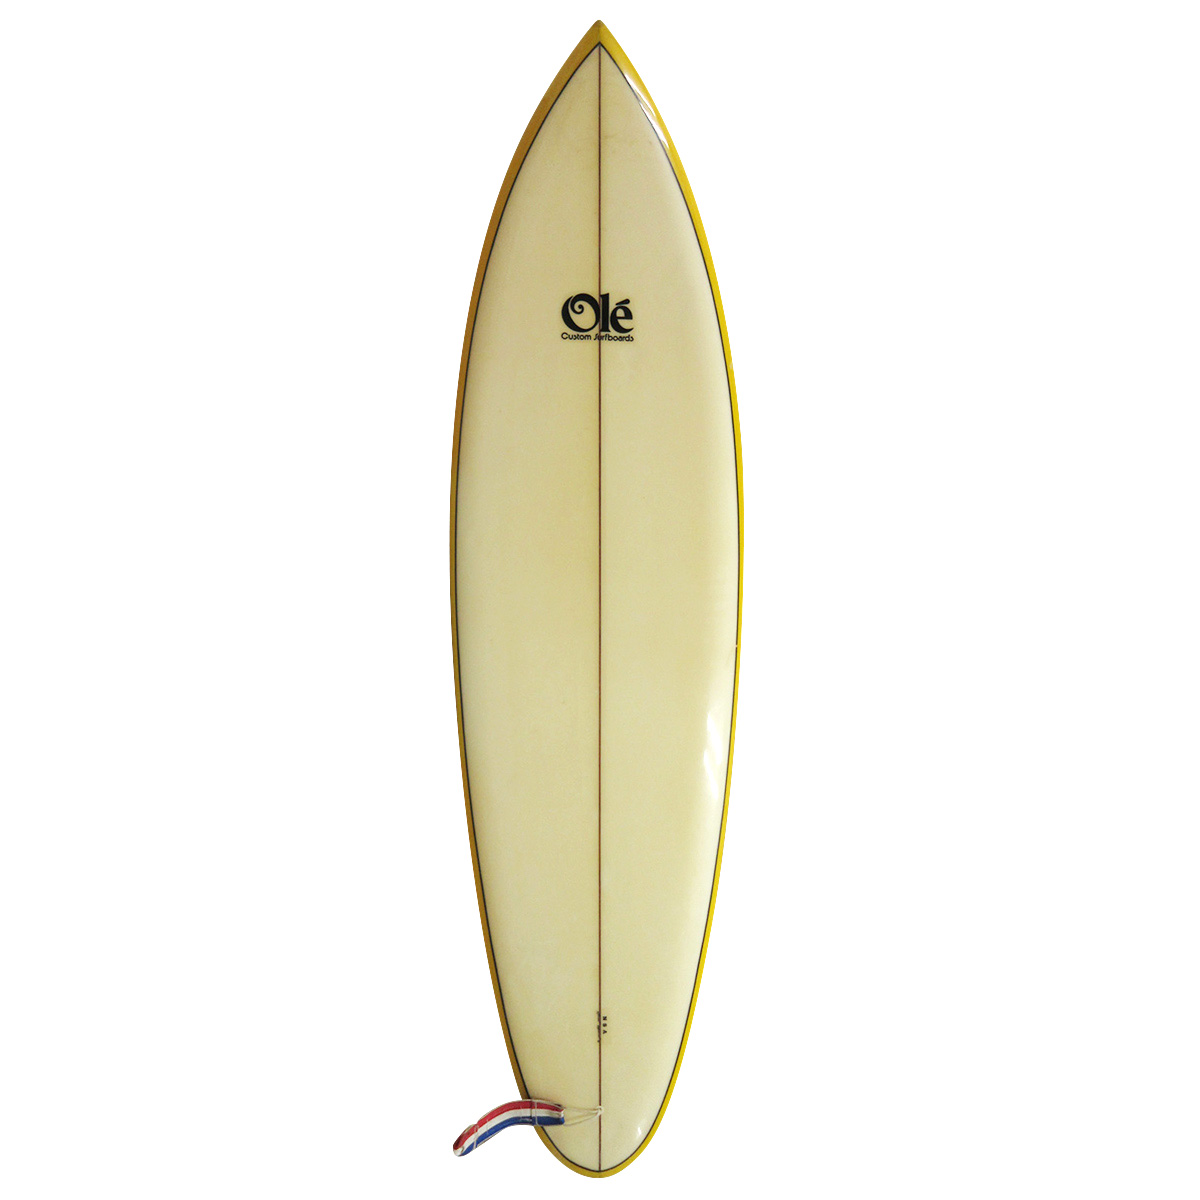  / OLE Custom Surfboards  / 70's Single shaped by Bob Olson